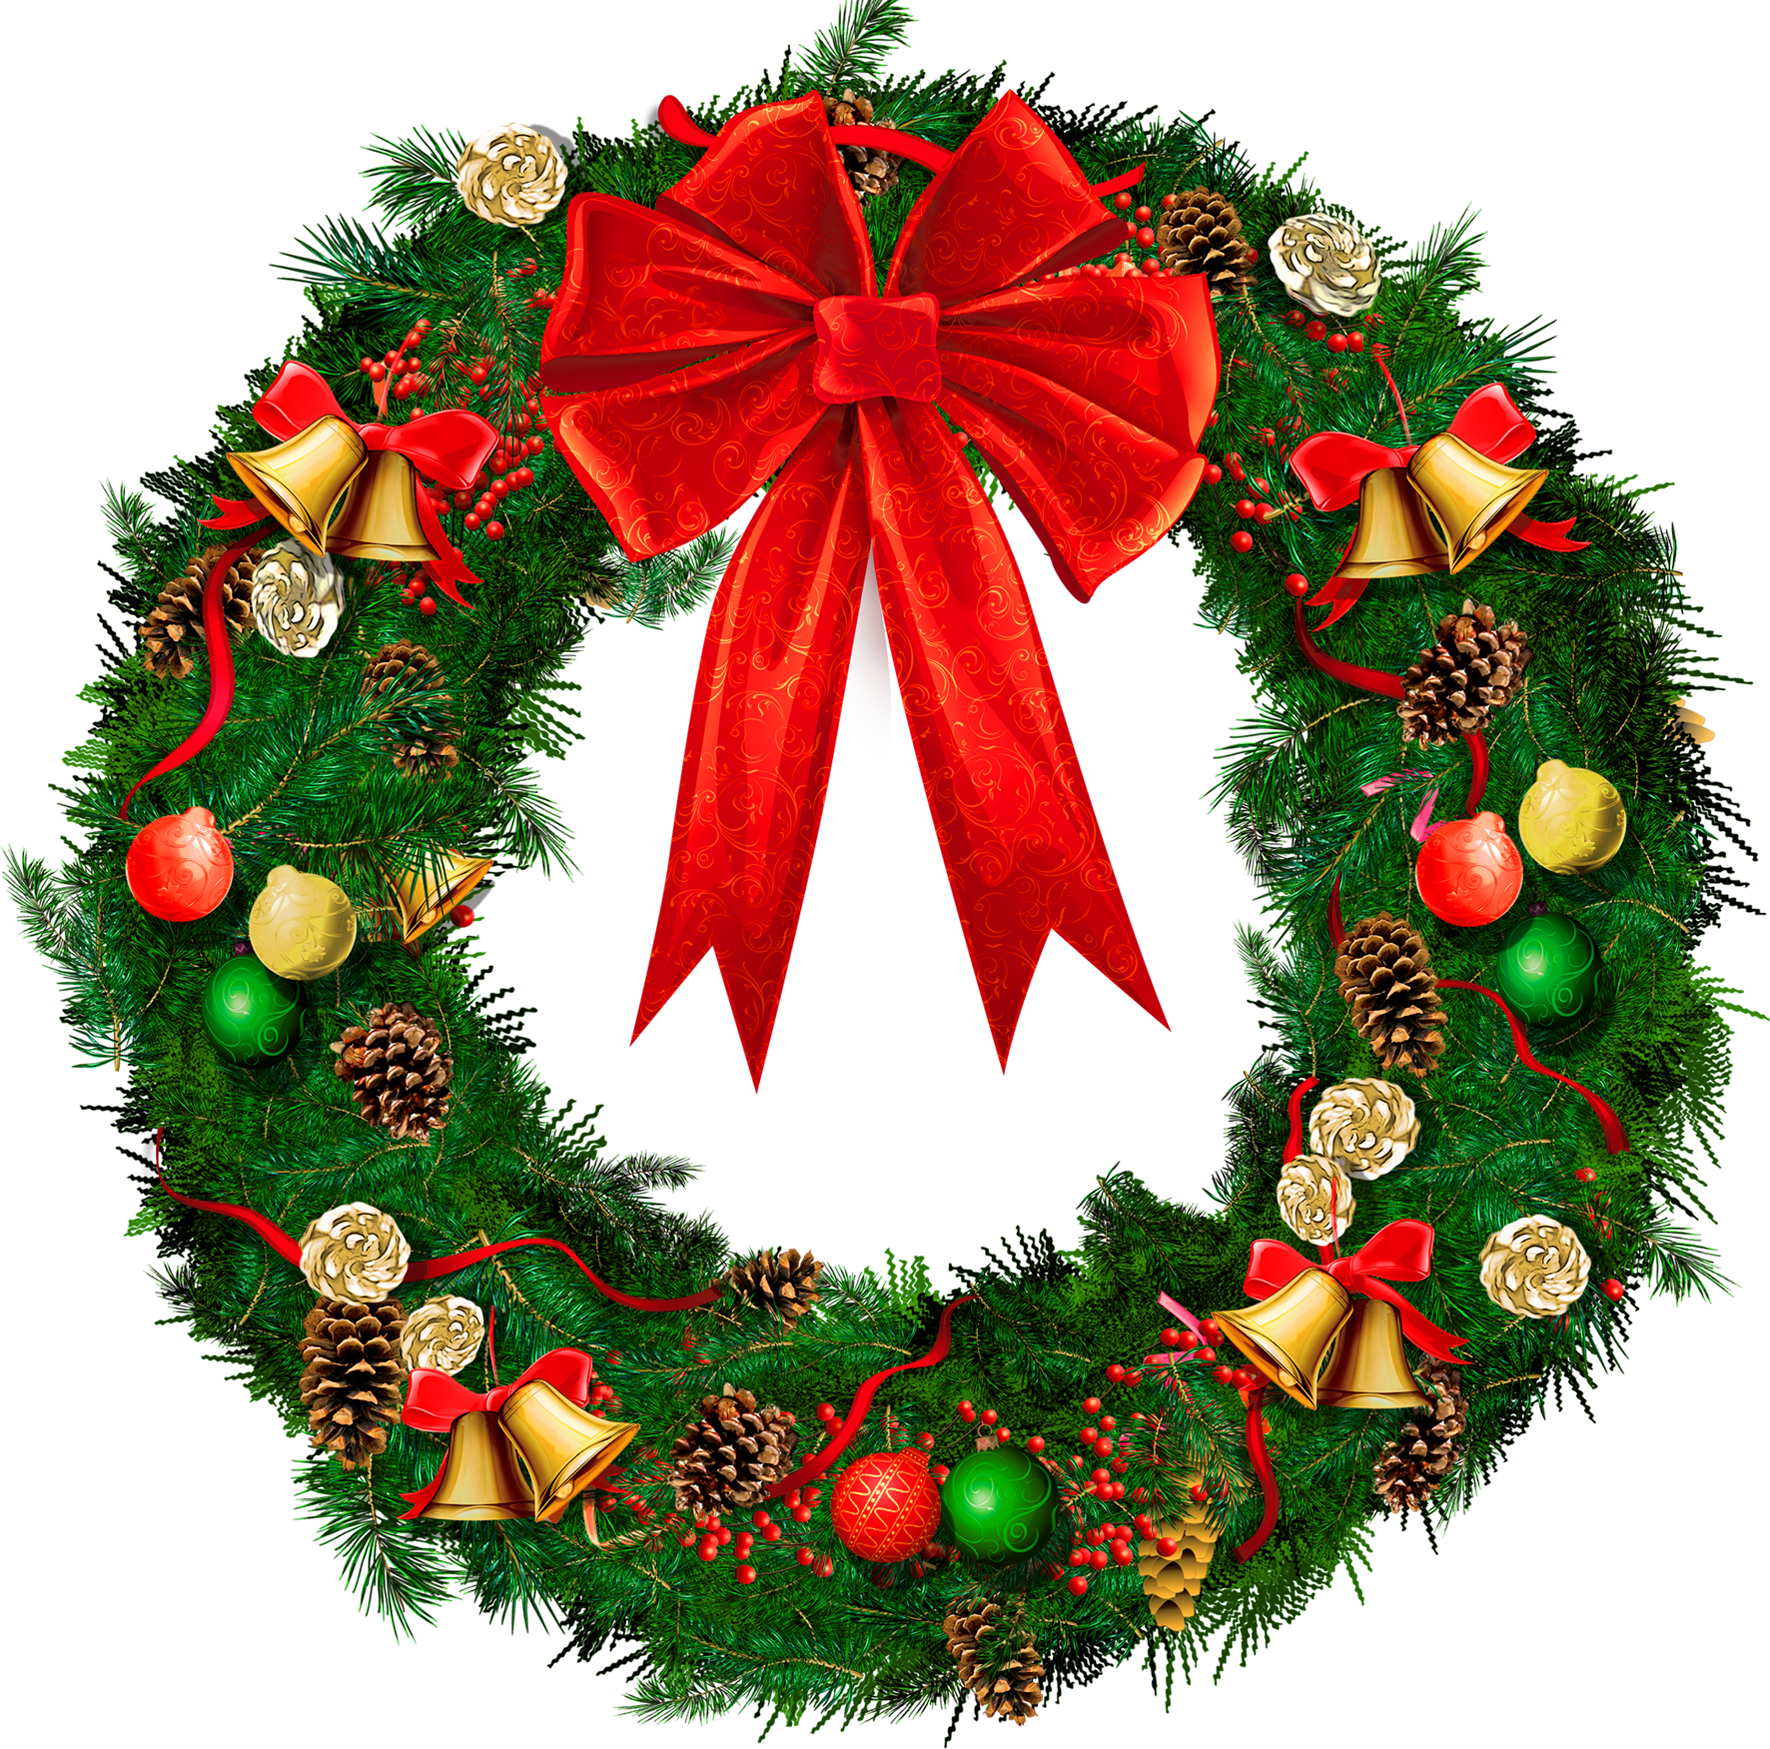 Christmas Wreath Pictures Clip Art - ClipArt Best